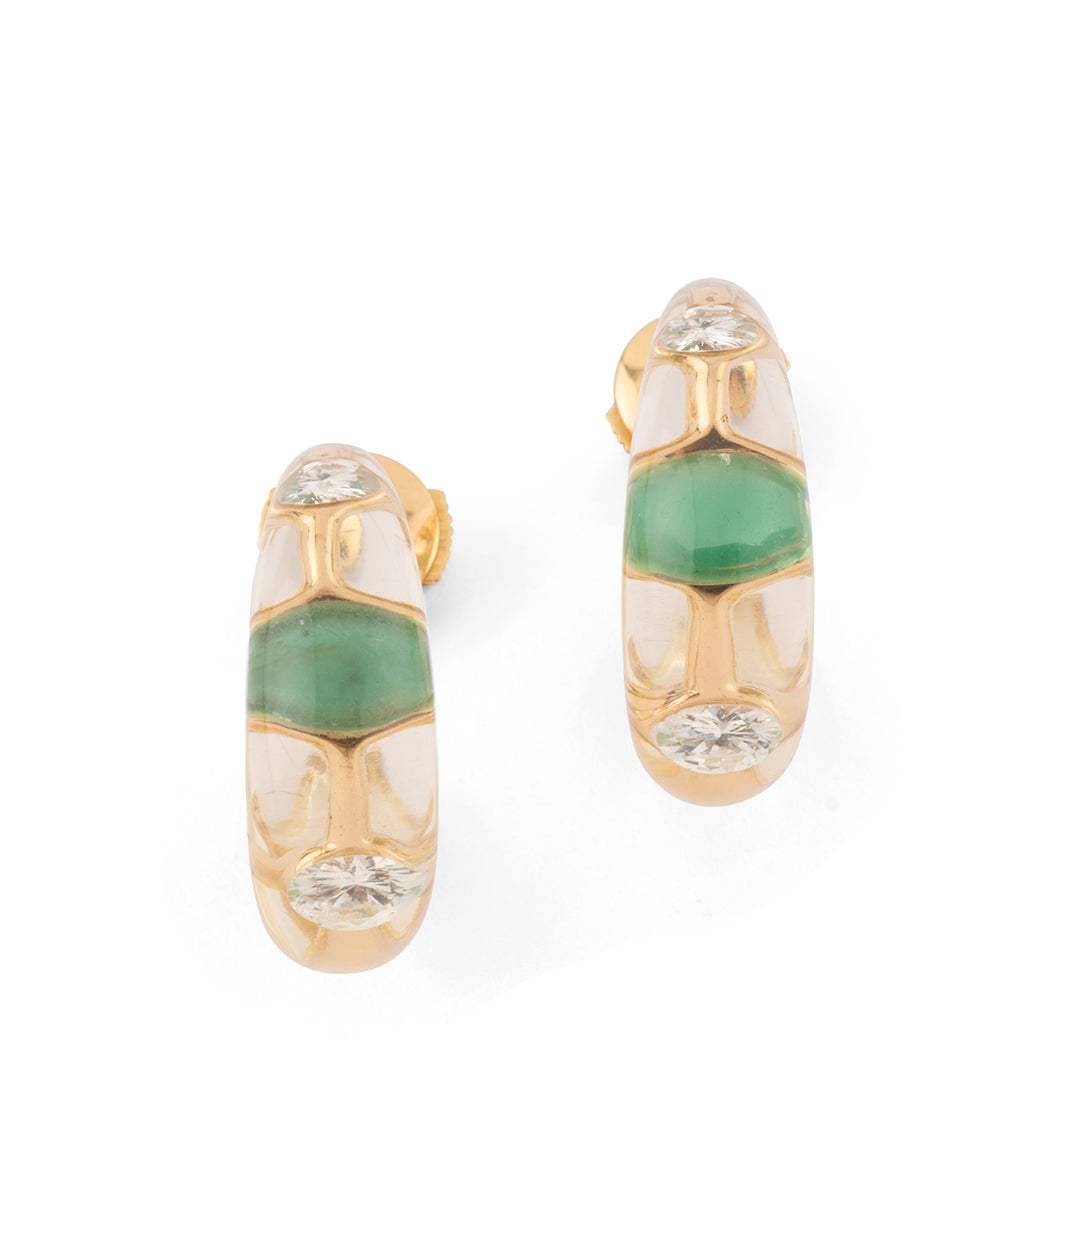 Morabito vintage hoop earrings diamonds and emeralds - Caillou Paris